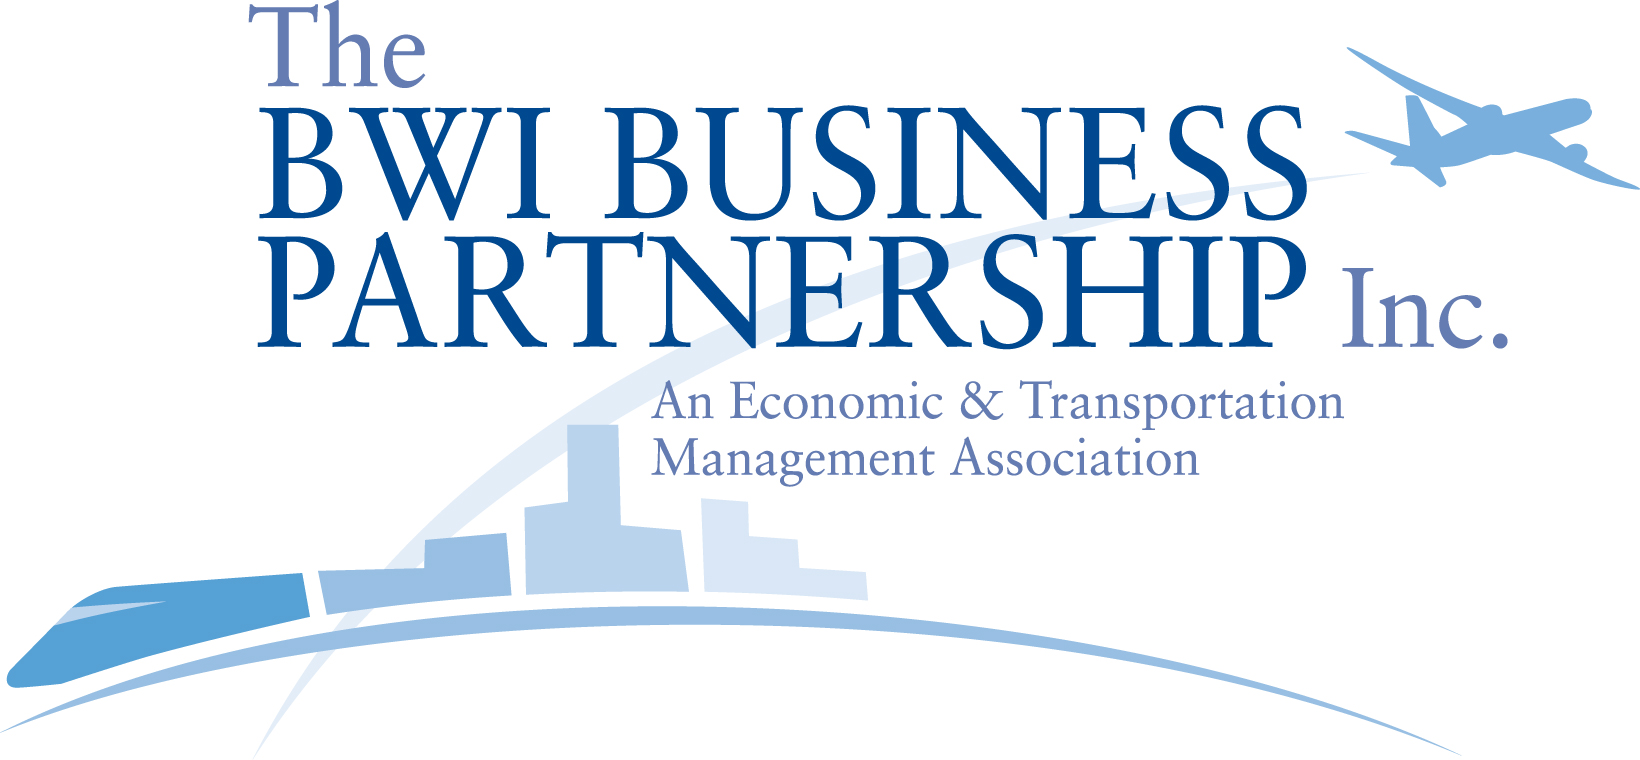 BWI Business Partnership